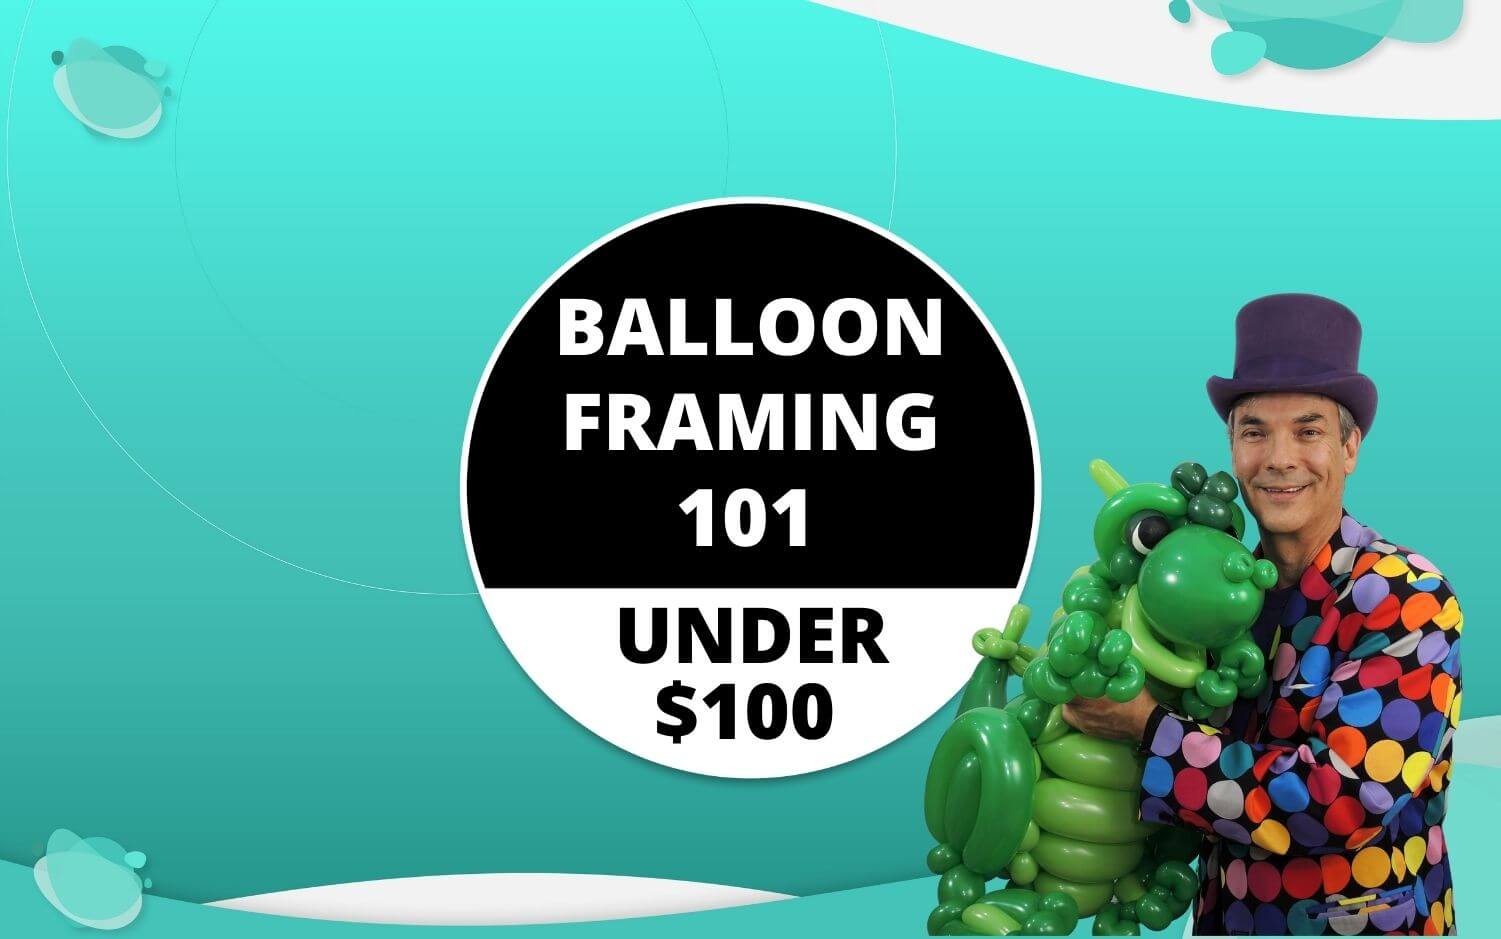 Balloon Framing 101 by Glen LaValley